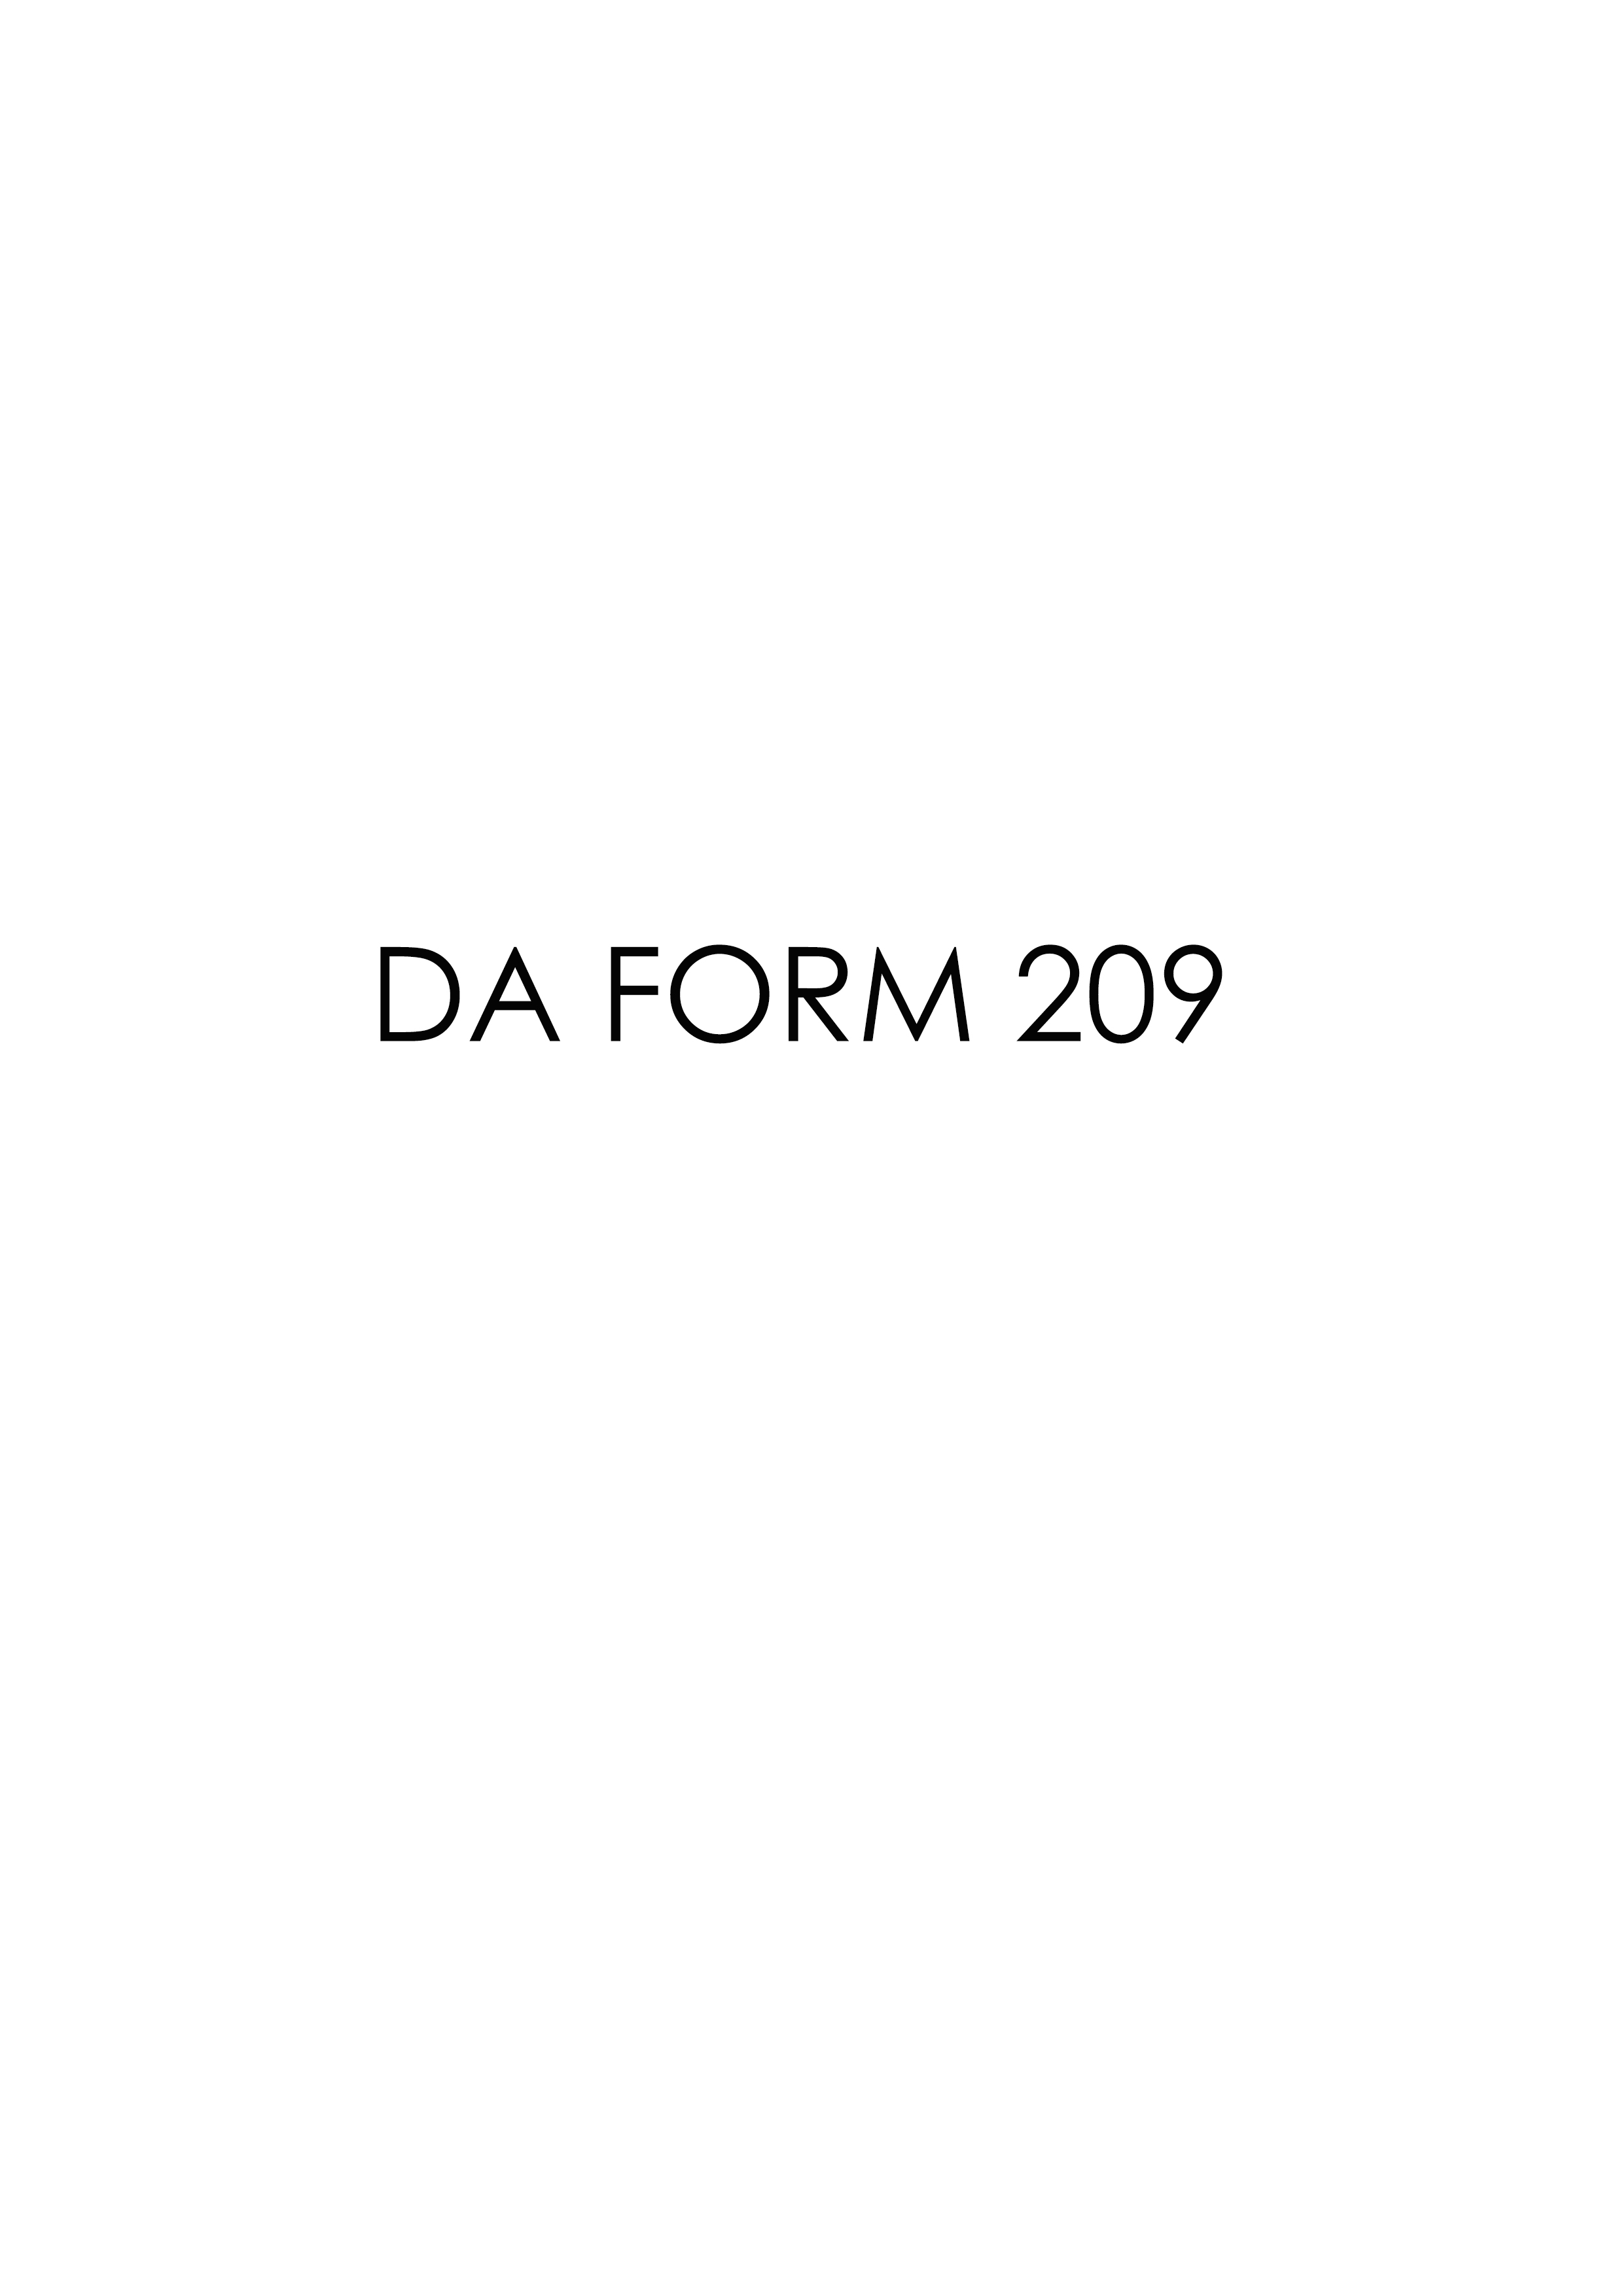 Download da 209 Form